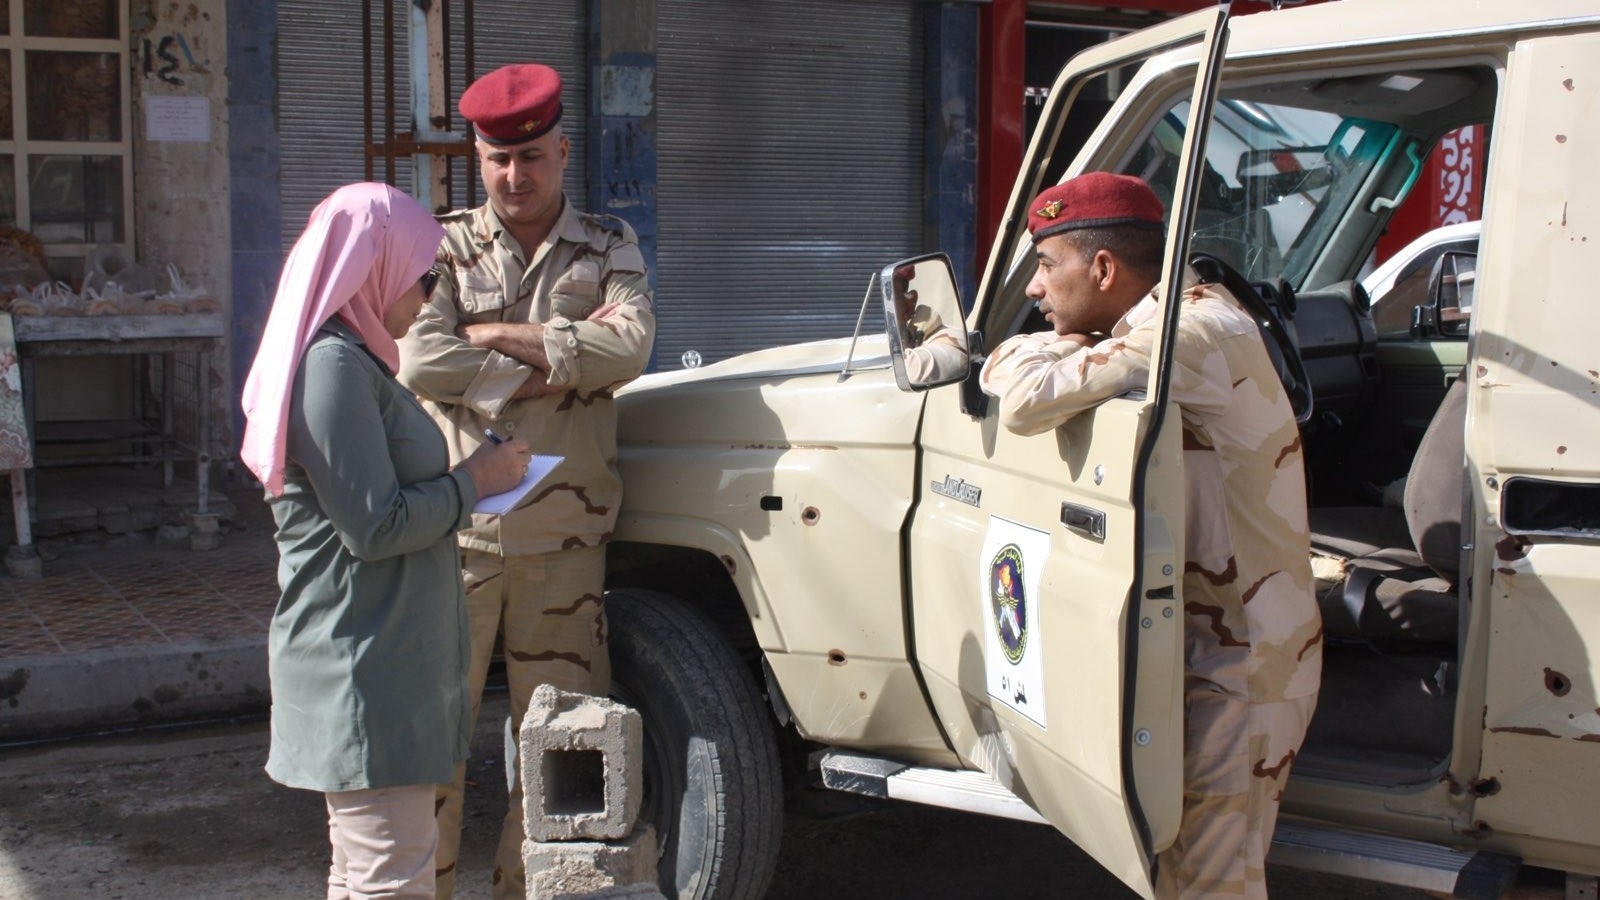 Suadad al-Salhy interviews security forces in Fallujah in 2018 (MEE)